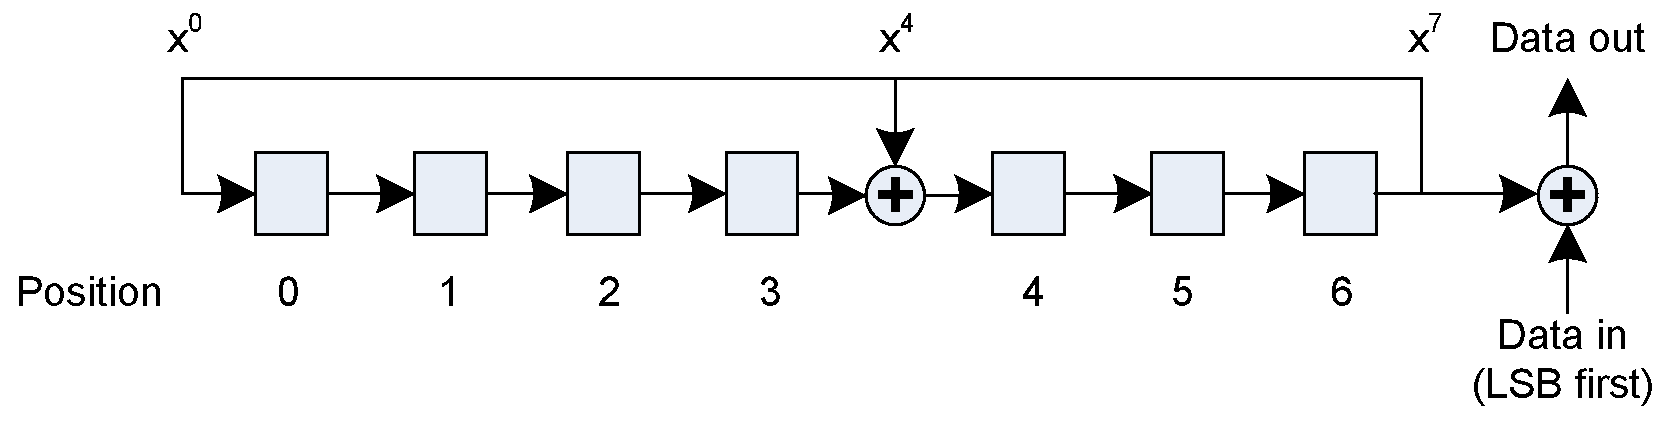 The LFSR circuit to generate data whitening